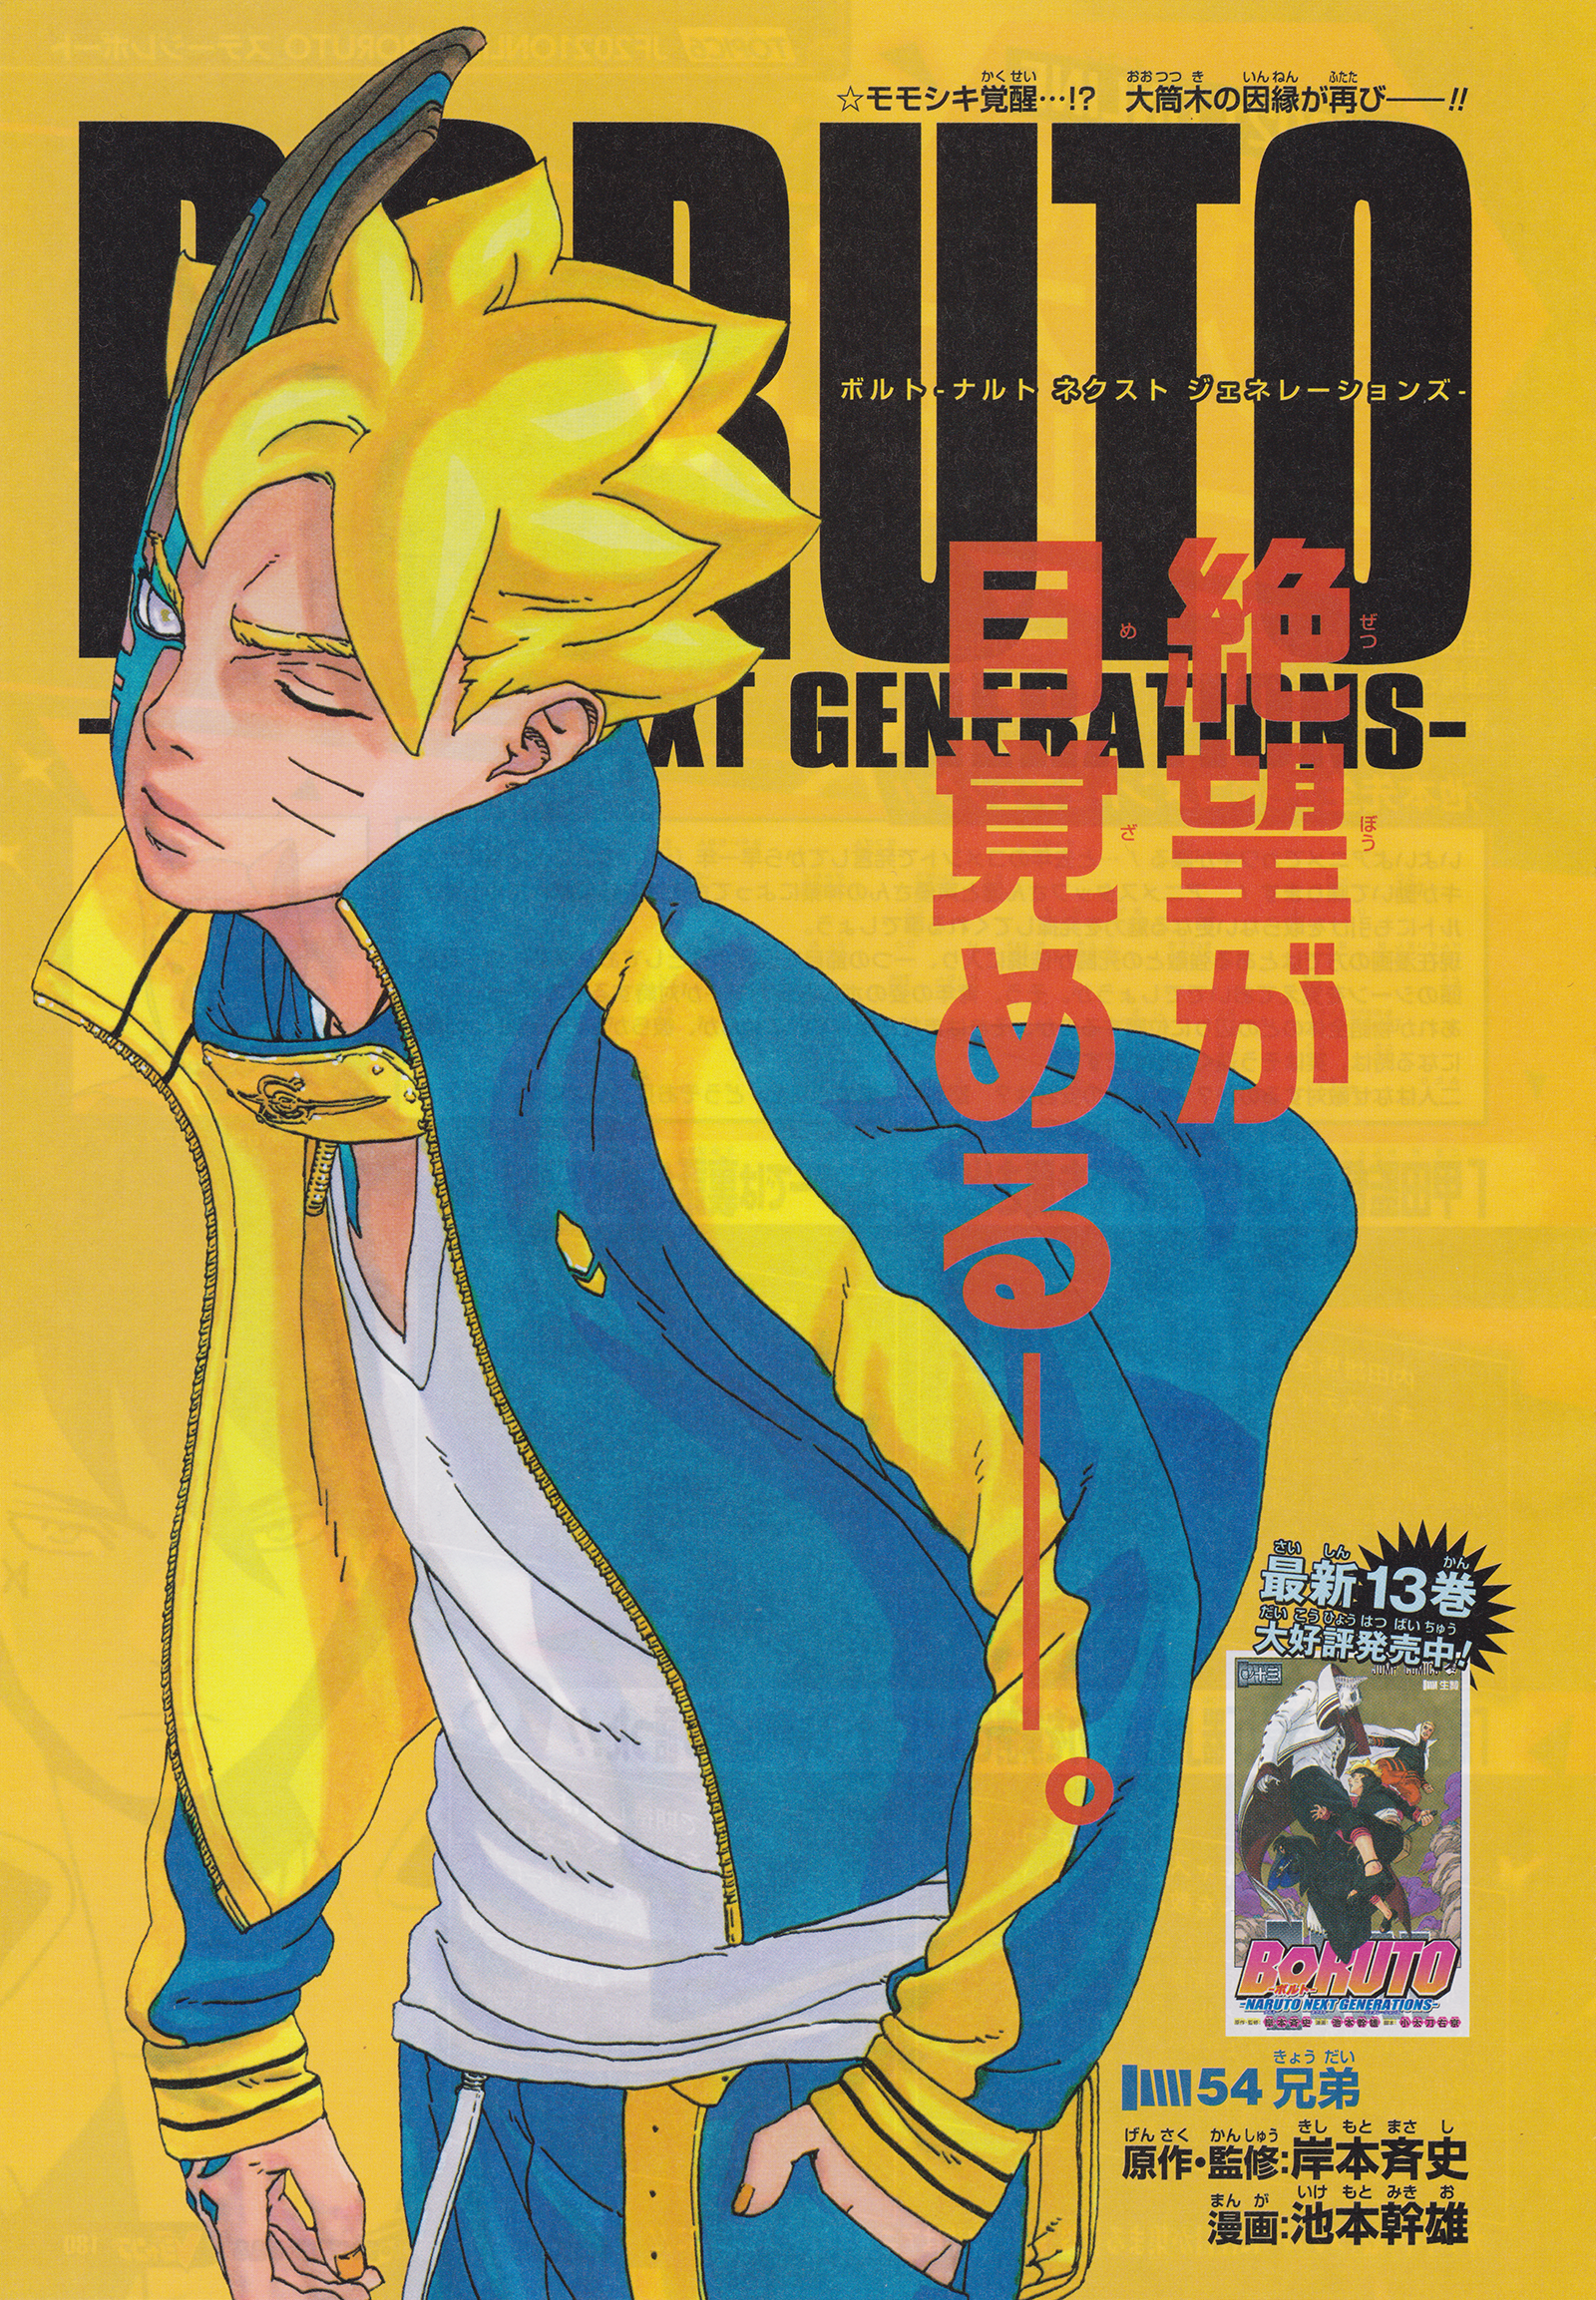 Boruto : Naruto Next Generations on X: Momoshiki vs Kawaki in Boruto Ep  218  / X